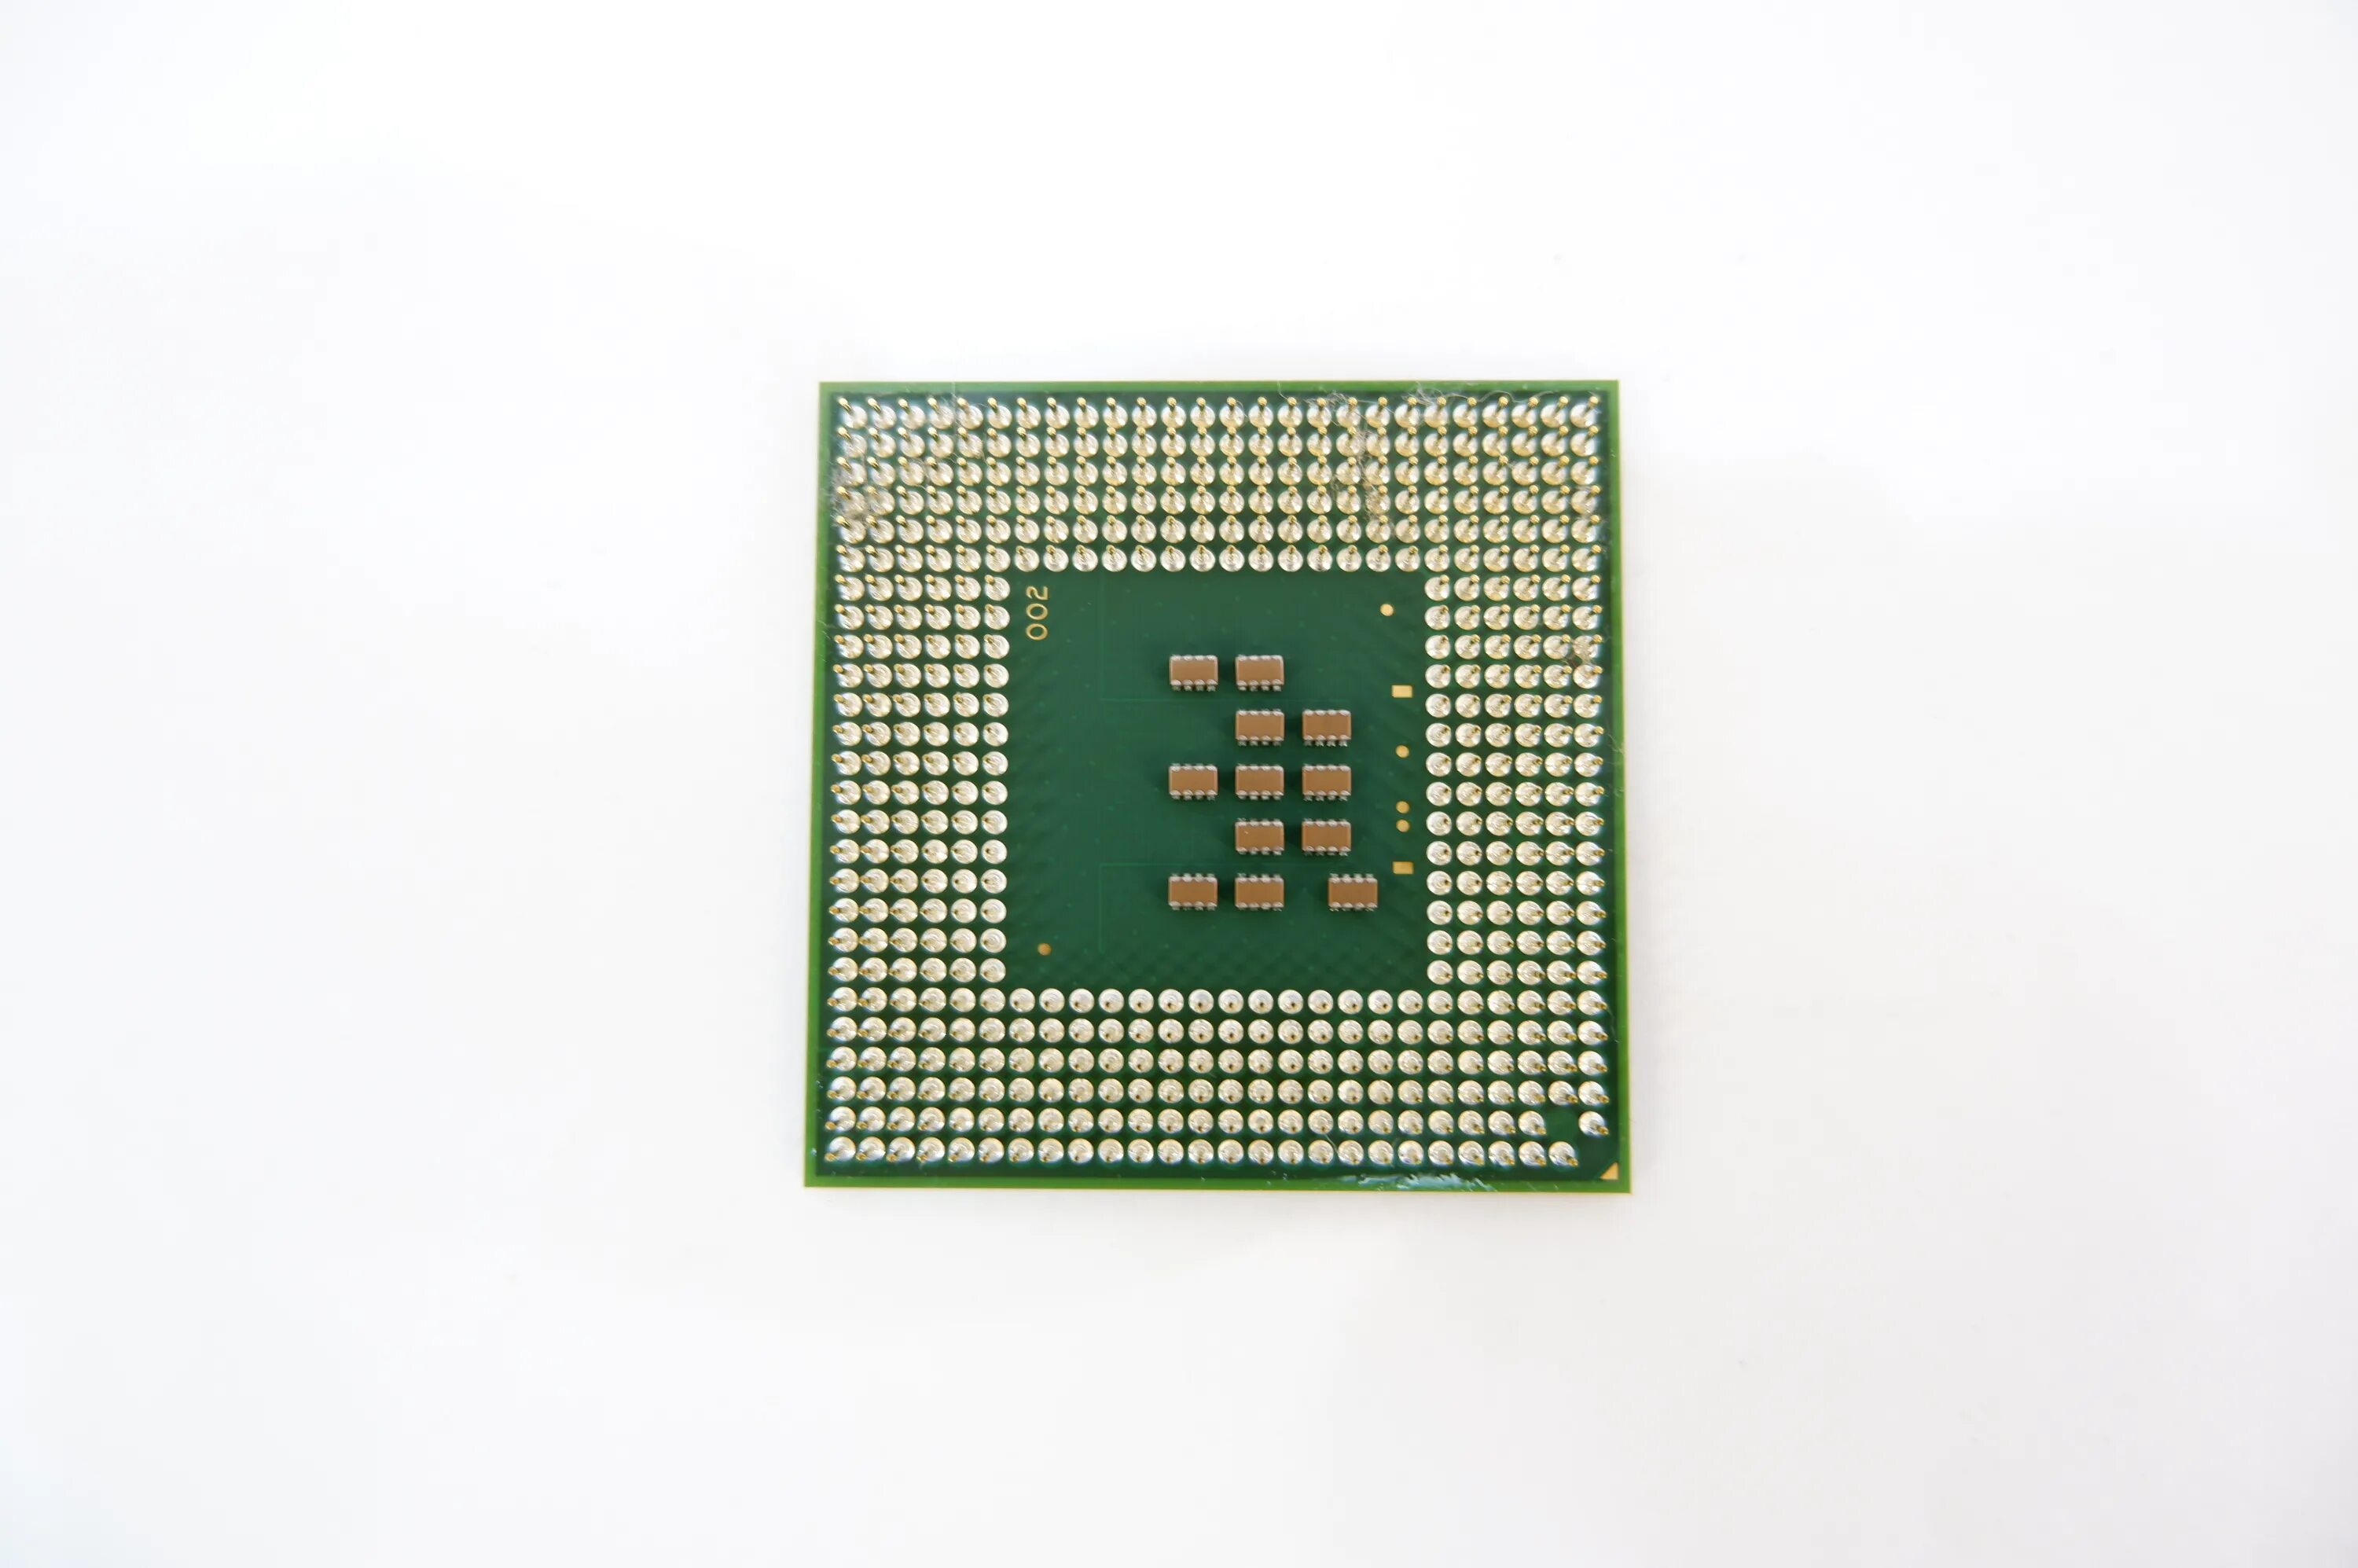 Модель процессора ноутбука. Процессор Intel 478 Socket. Процессор Intel® Pentium® m 725. Celeron sl68p. Pentium m (0,6—2,6 ГГЦ) (Dothan).